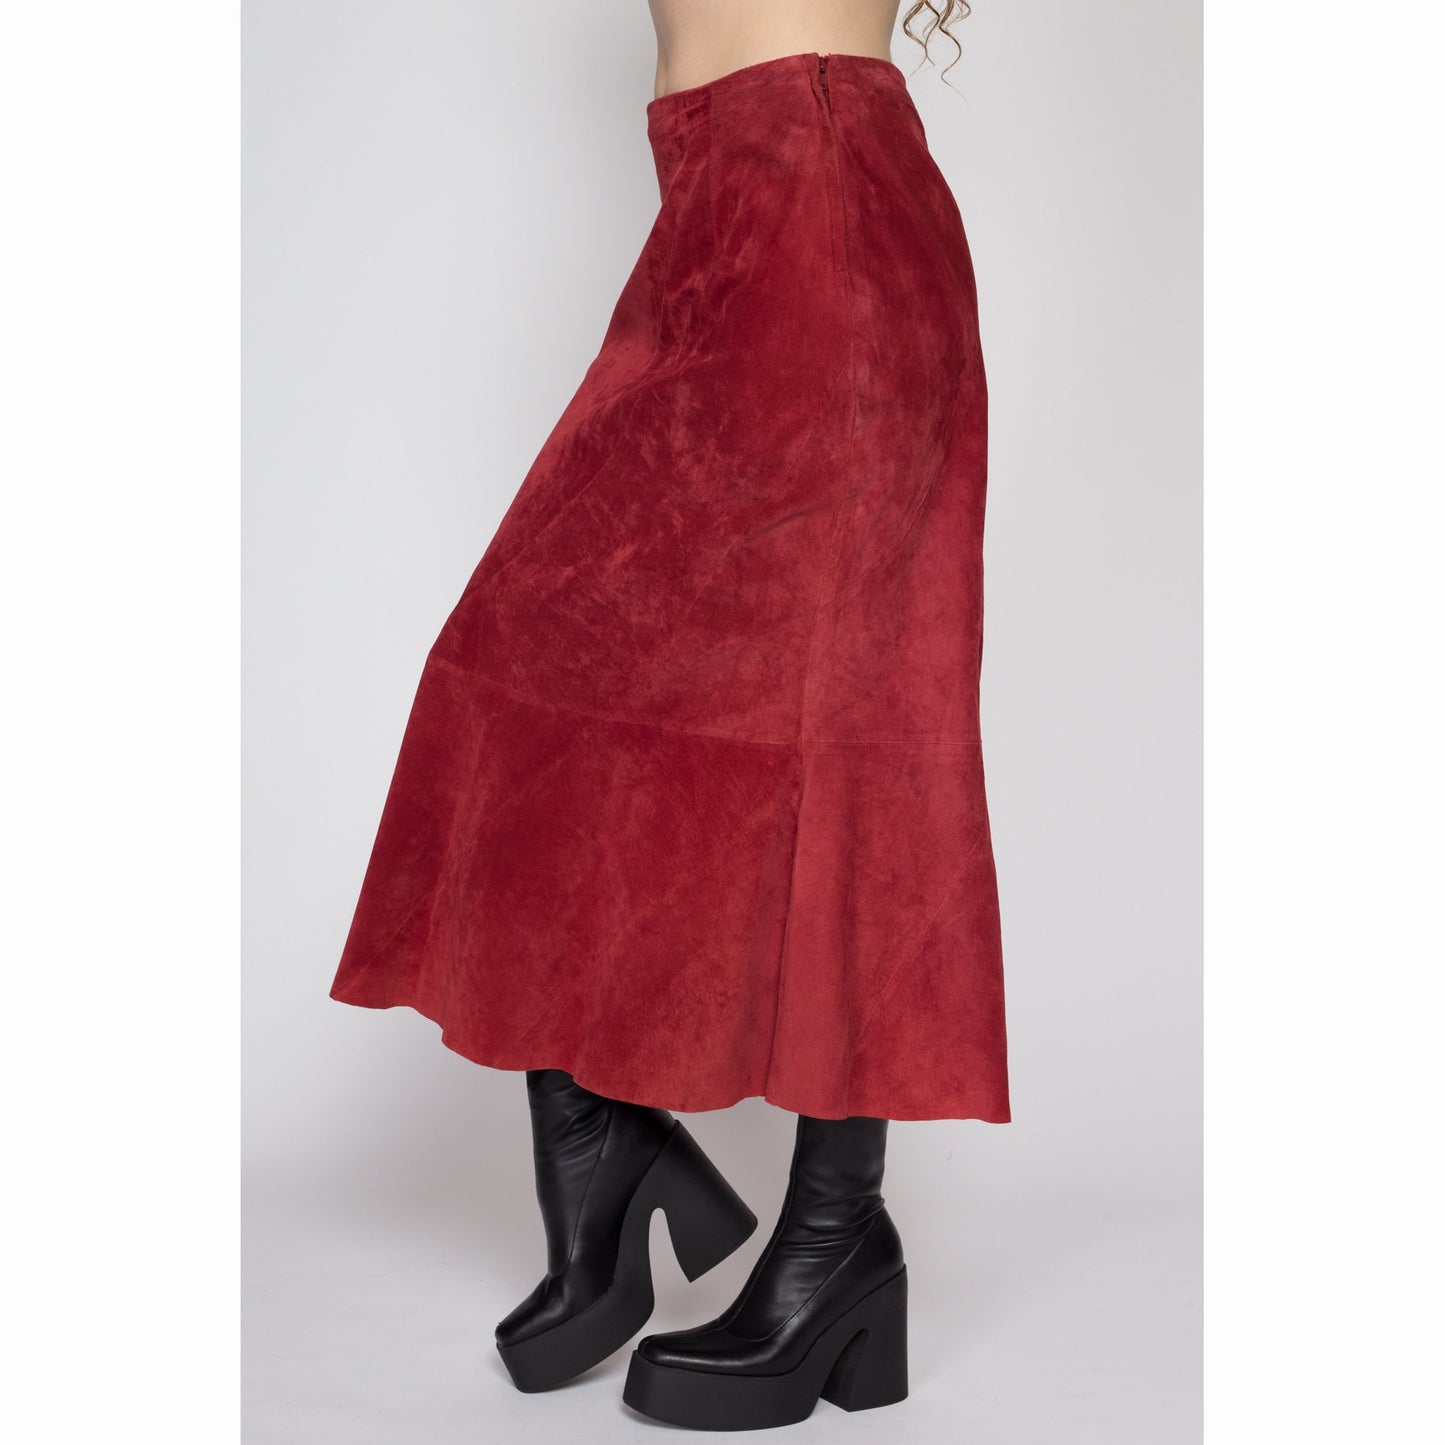 Medium 90s Boho Raspberry Red Suede Midi Skirt | Vintage High Waisted A Line Mermaid Skirt